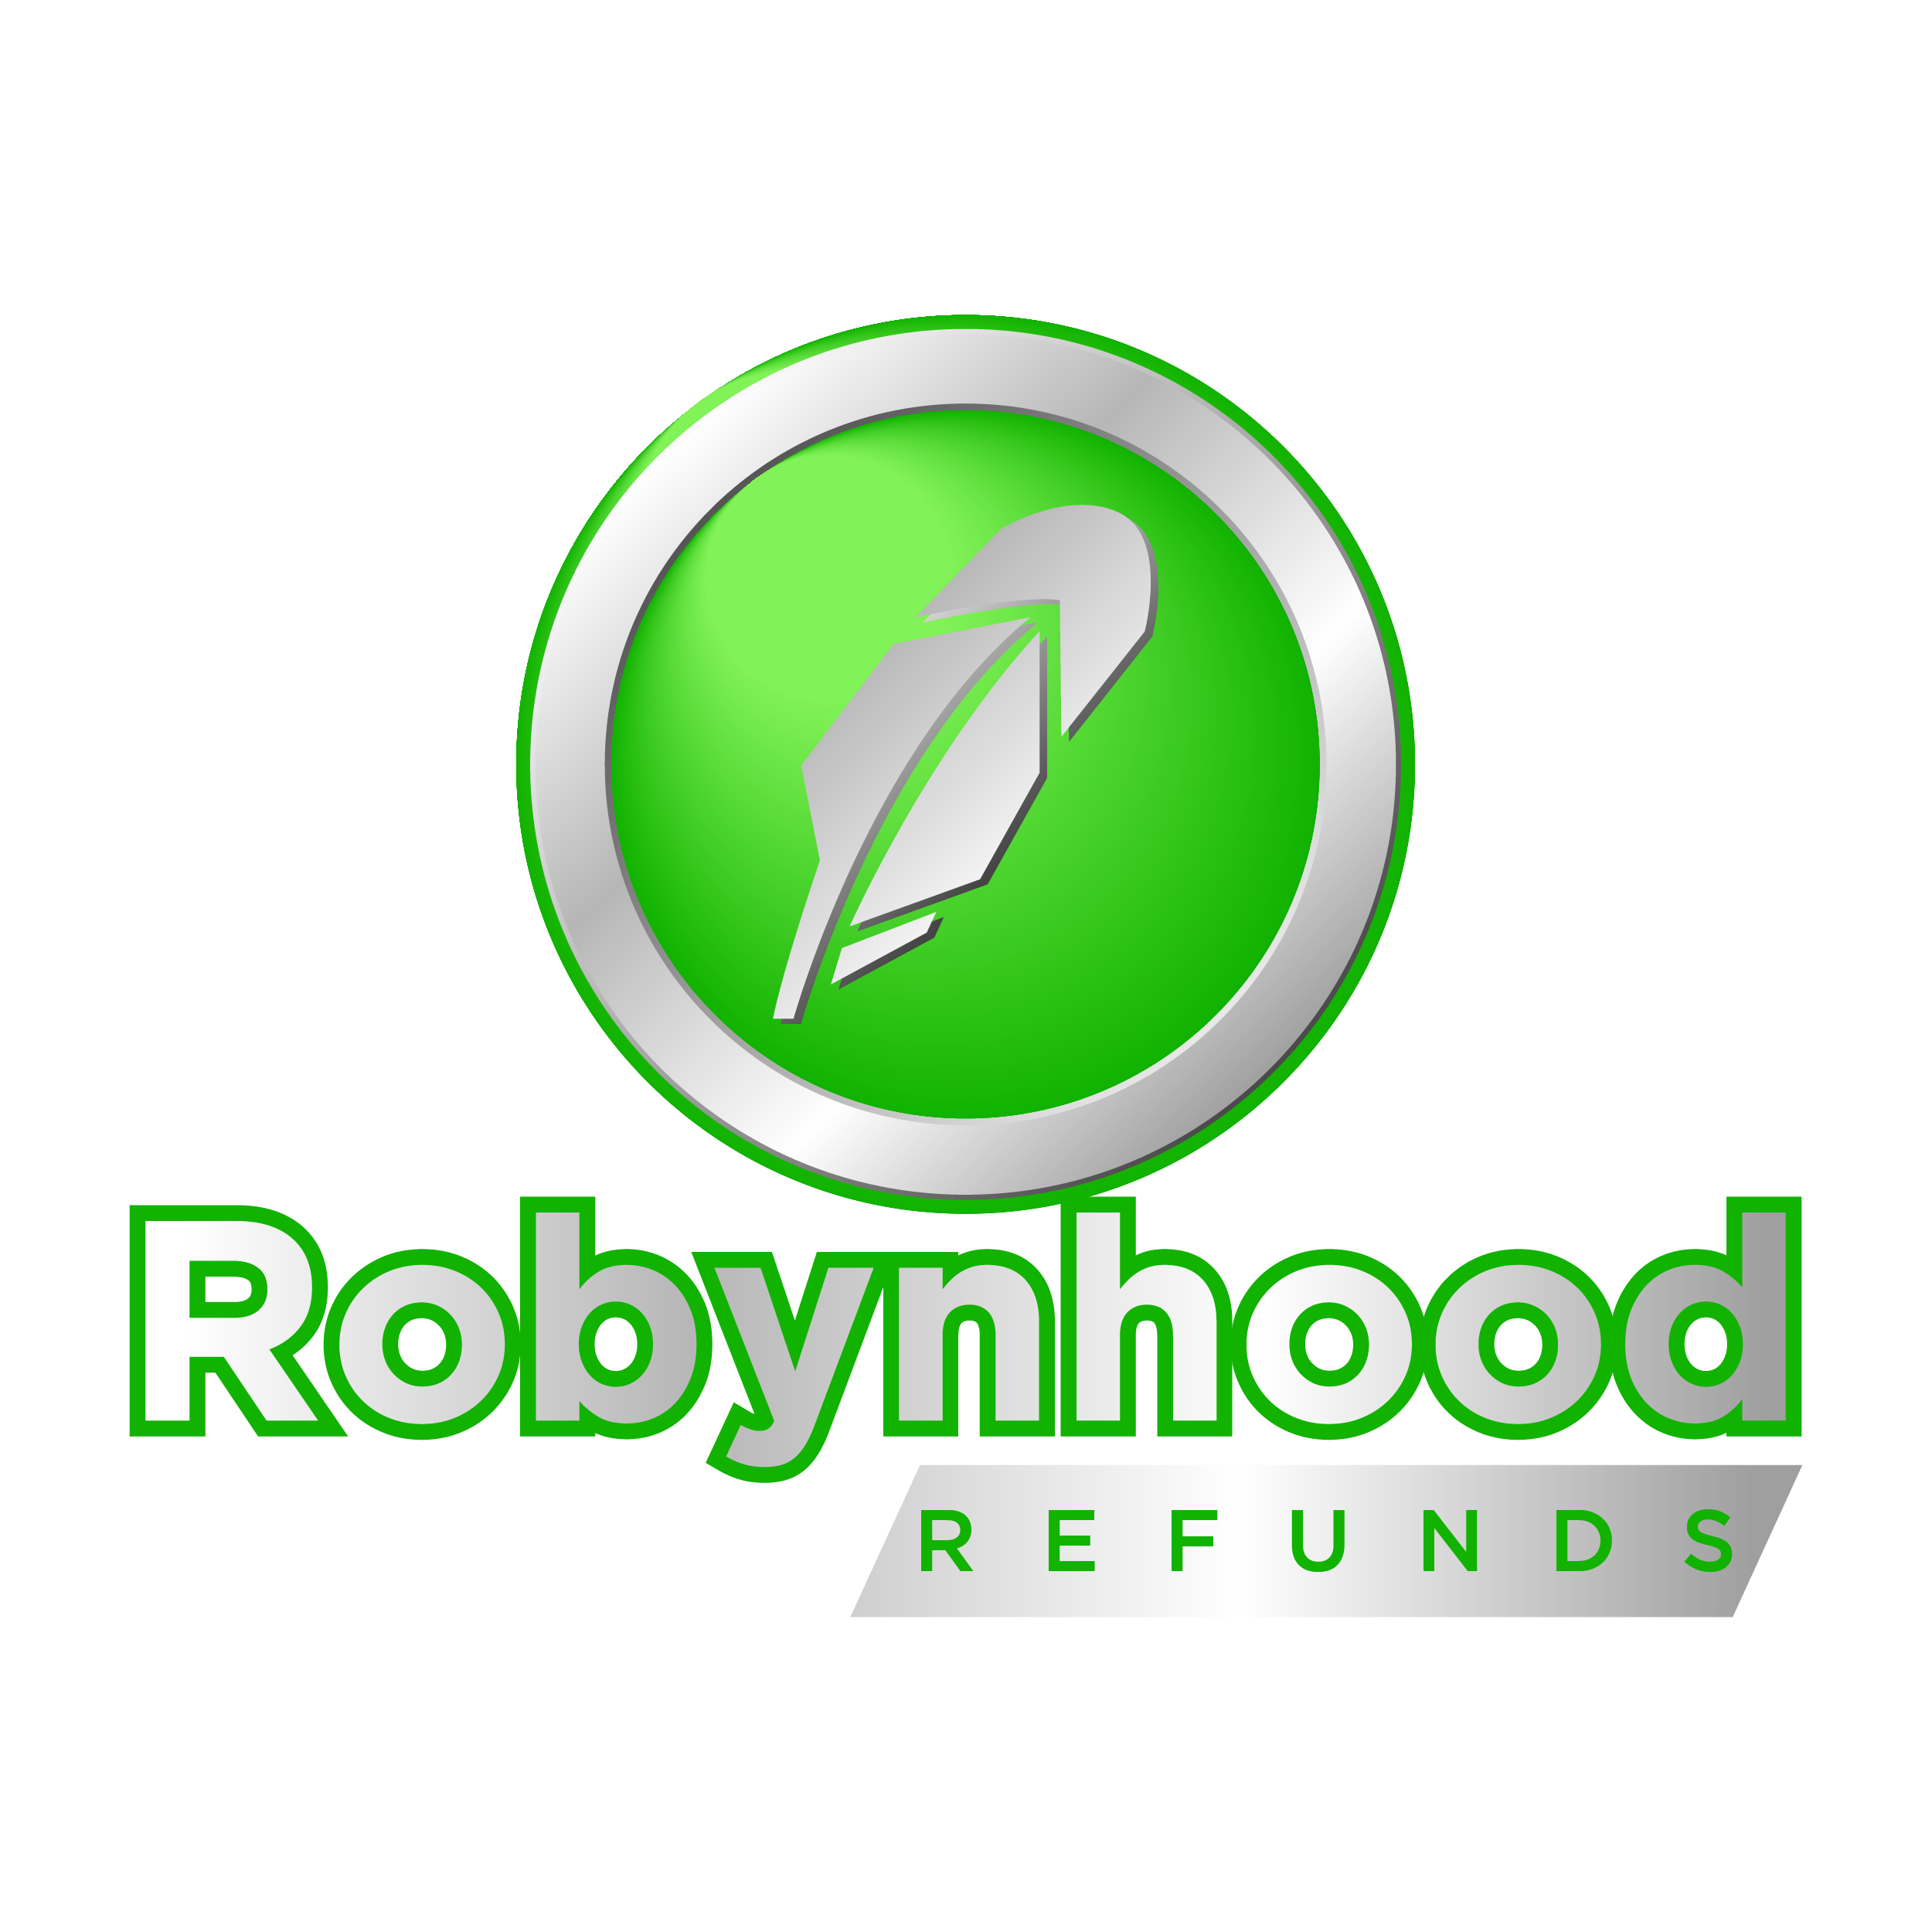 Robyn Hood Refunds